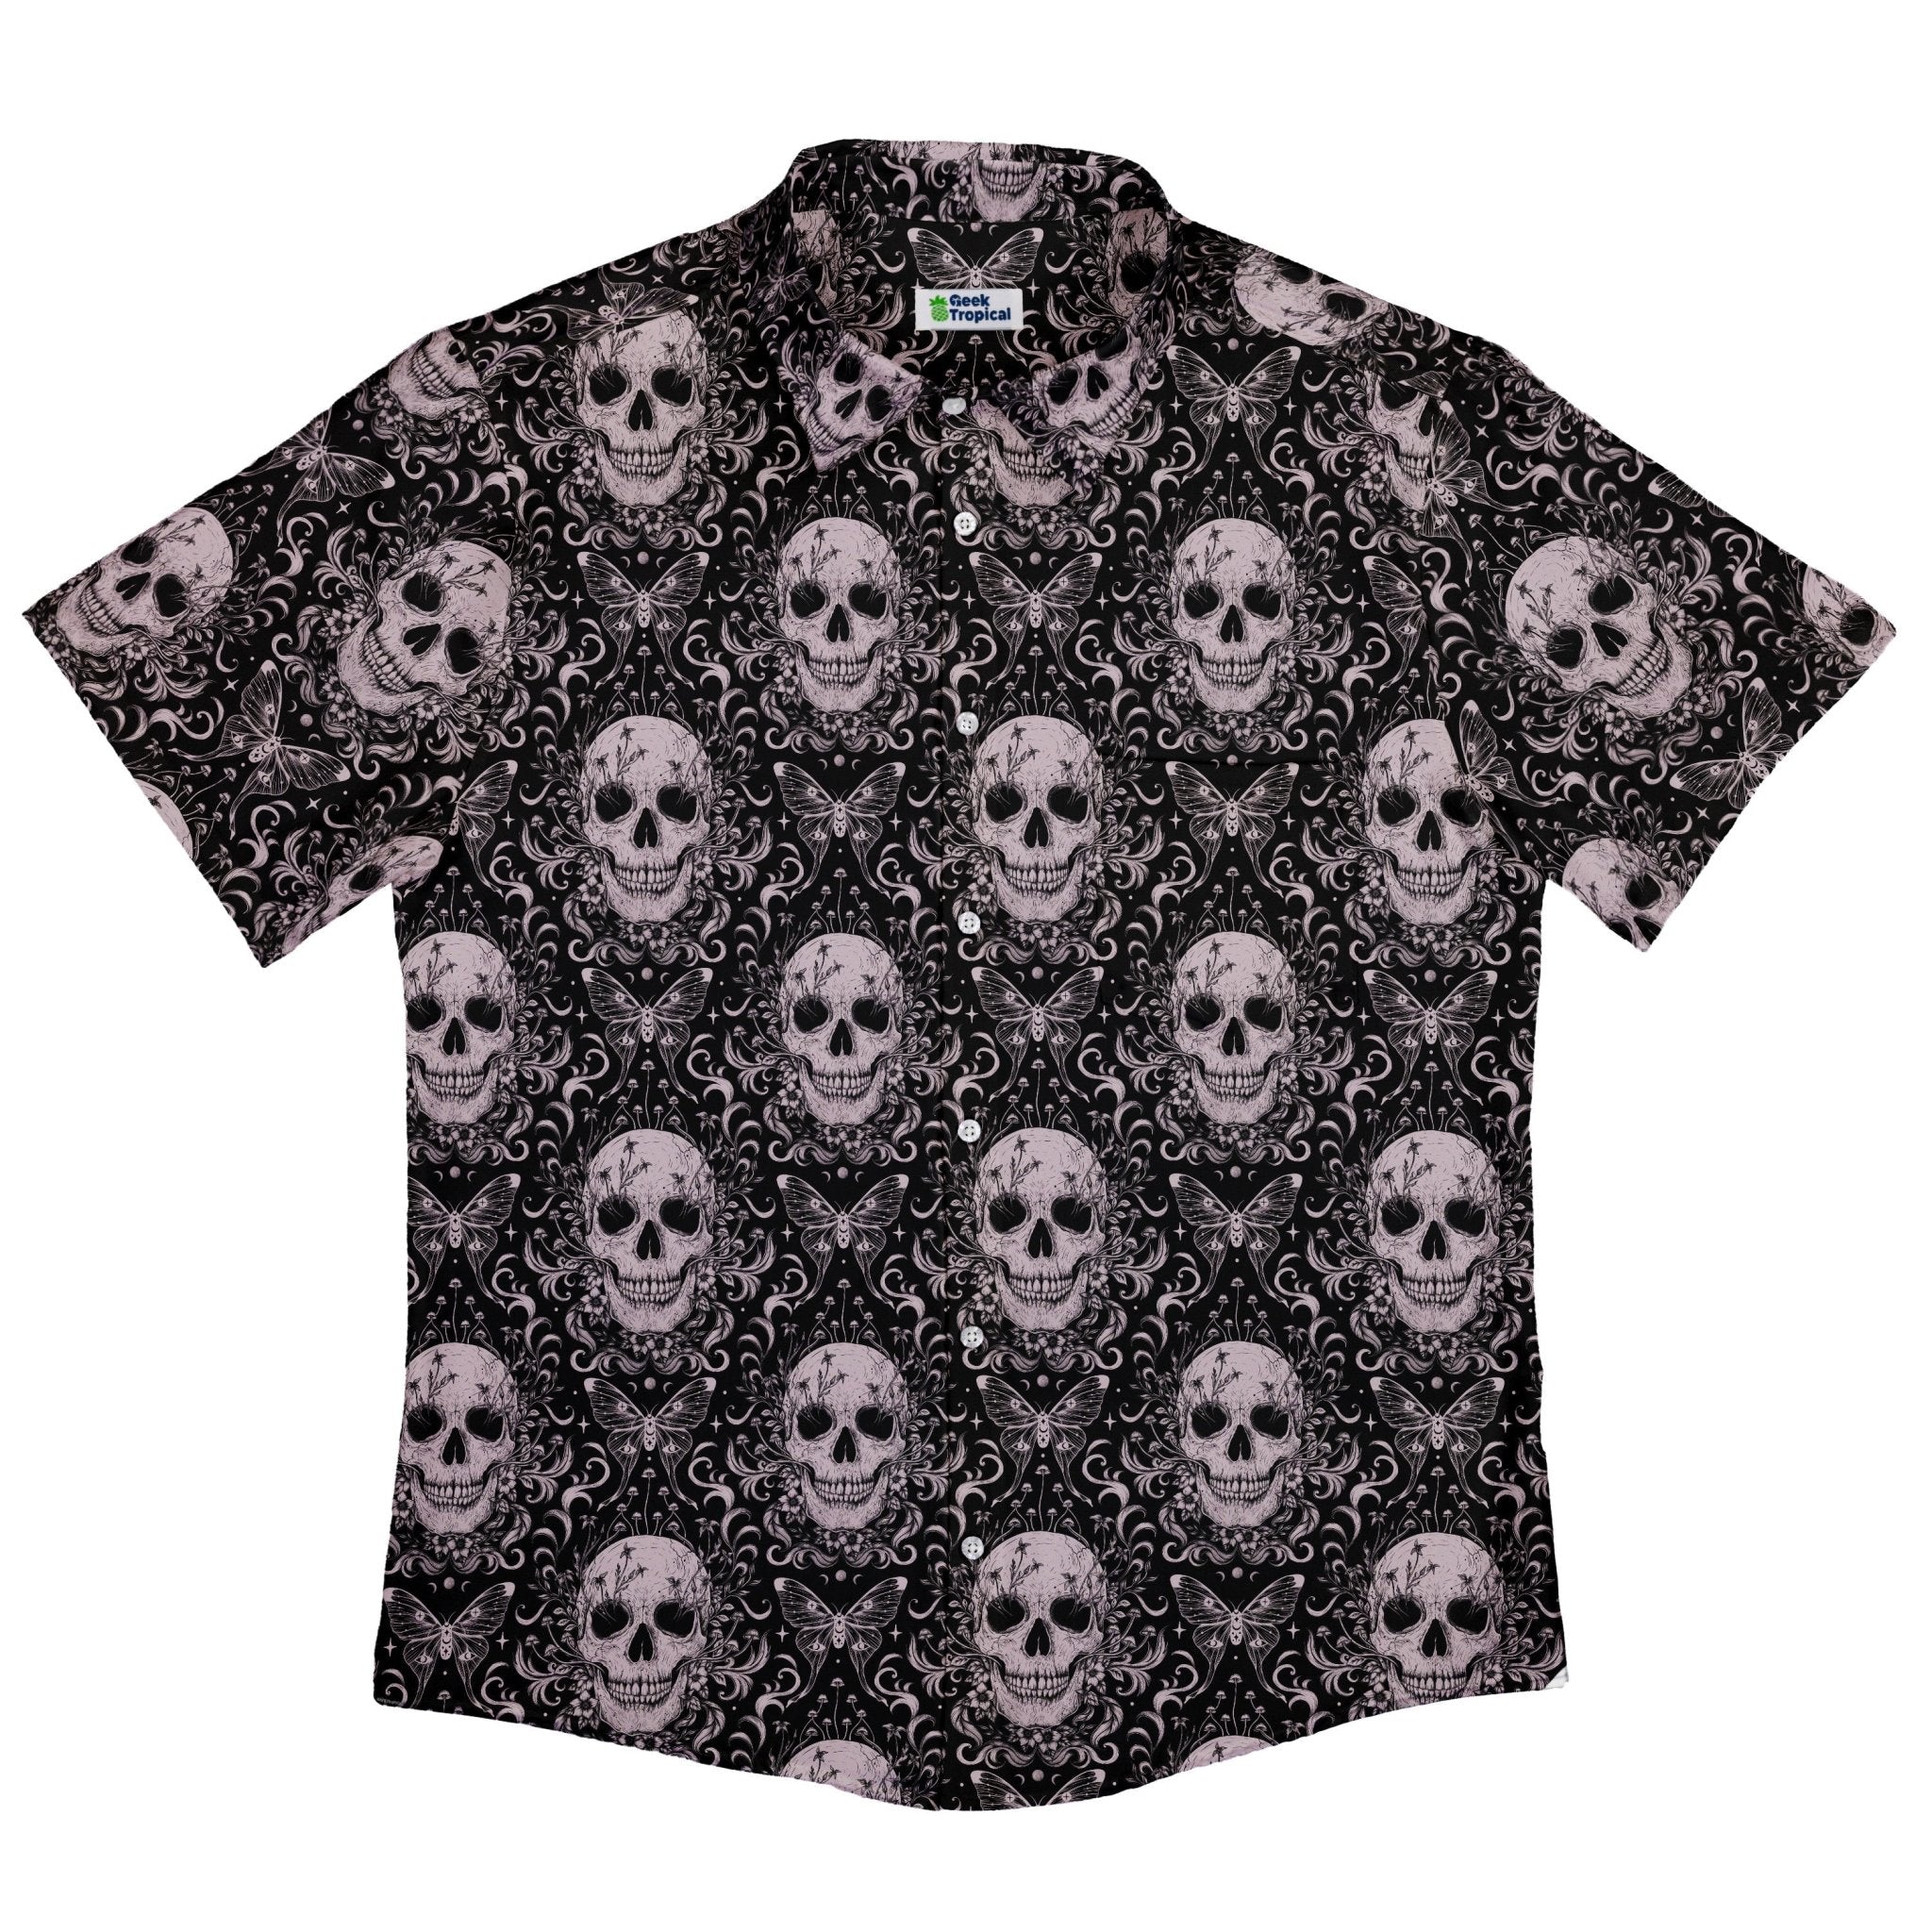 Episodic Skull Black White Button Up Shirt - XS - Button Down Shirt - No Pocket -